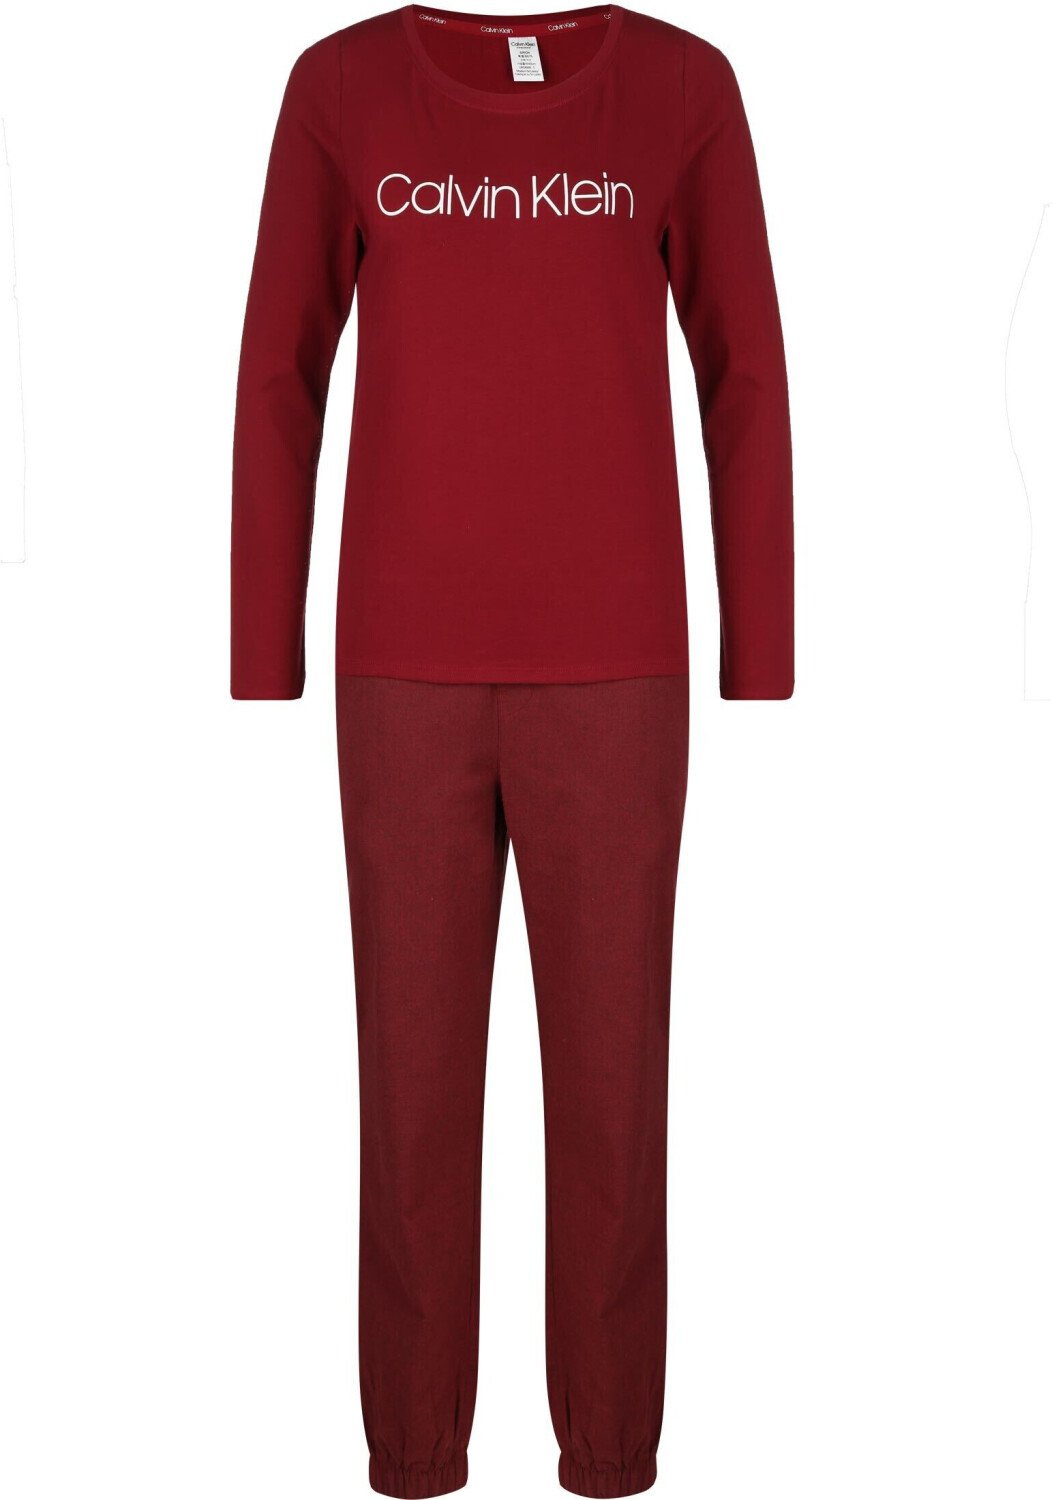 Calvin Klein Pyjamaset (000QS6579E) red € 72,65 ab Preisvergleich | bei carpet